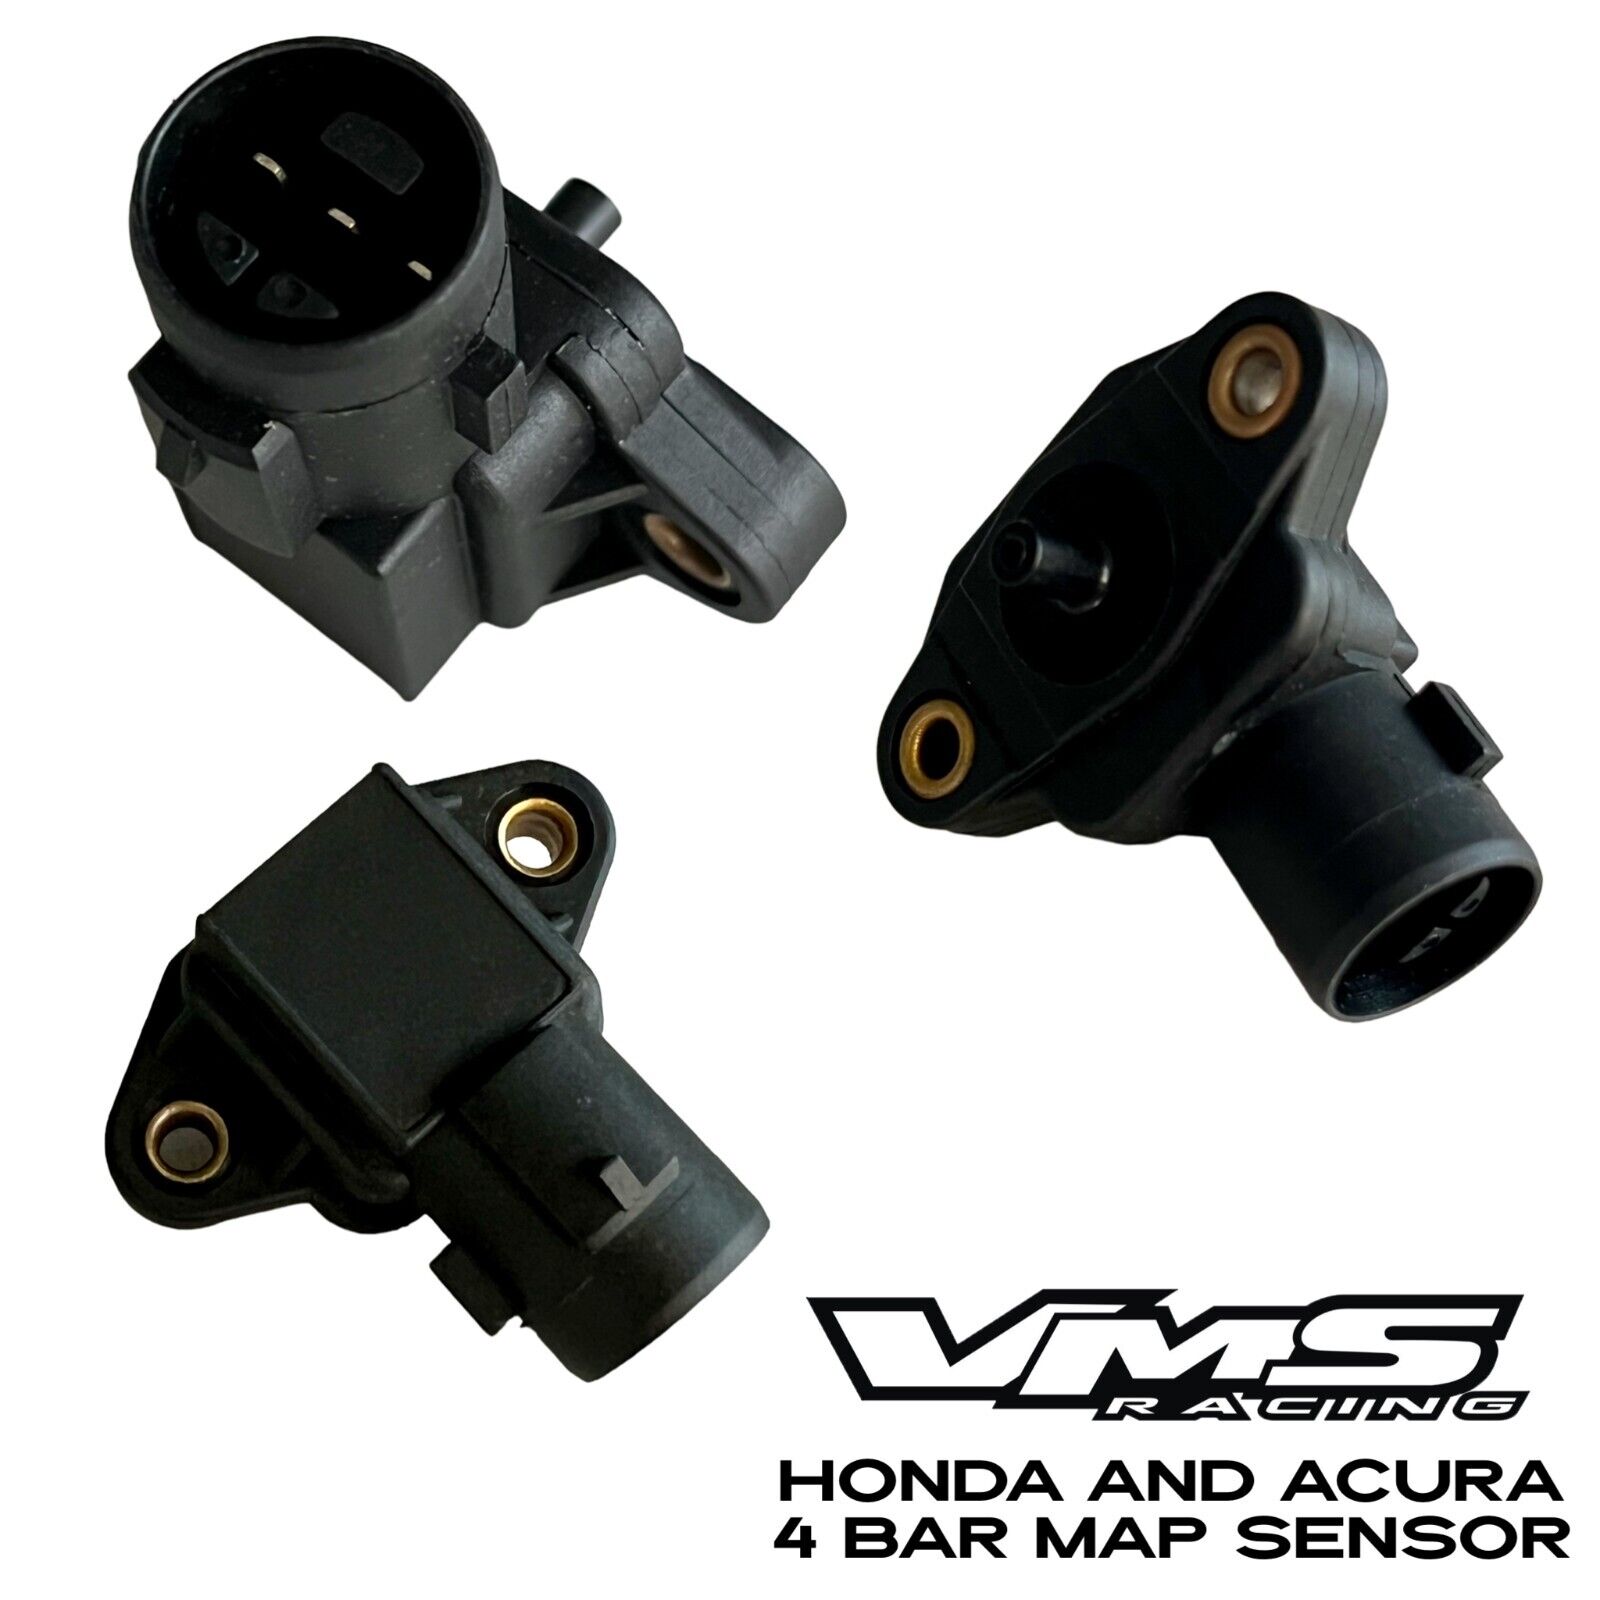 VMS Racing 4 Bar Race Map Sensor For Honda Acura B D H F Series Turbo Engines